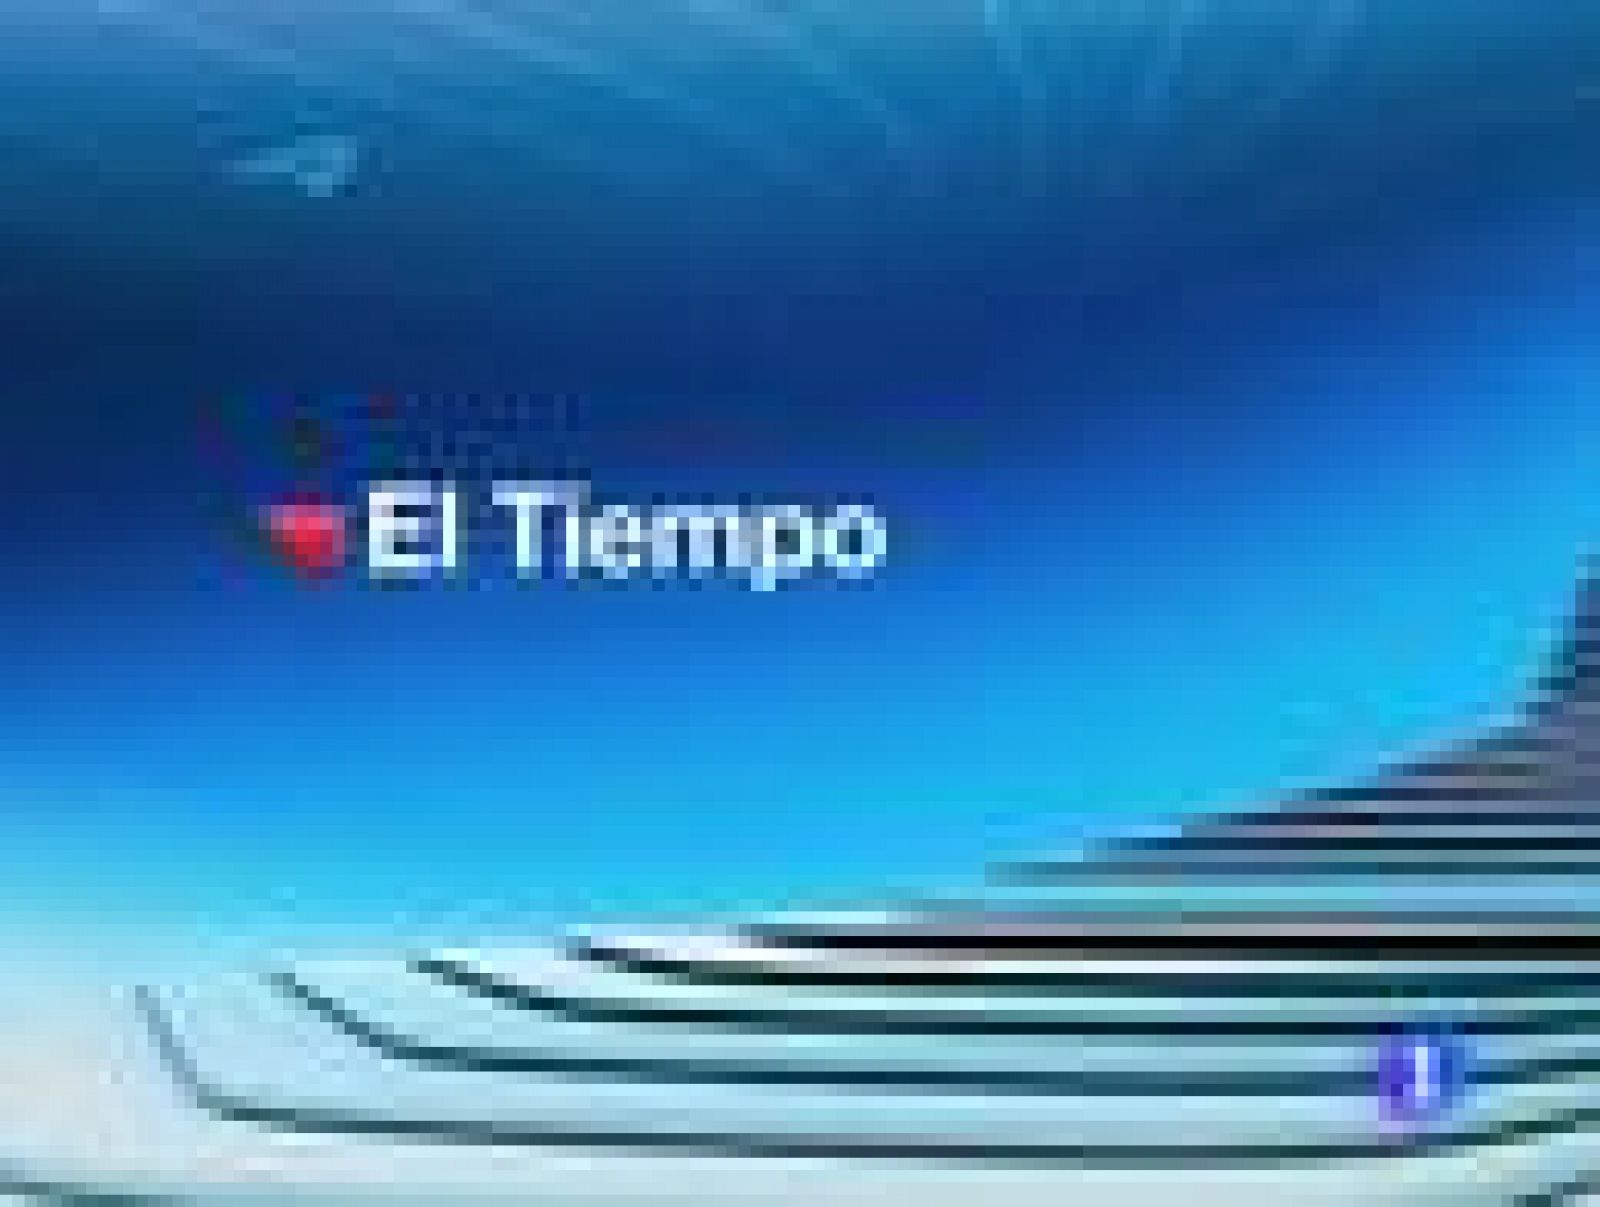 Informativo Telerioja: El tiempo en La Rioja - 12/07/12 | RTVE Play